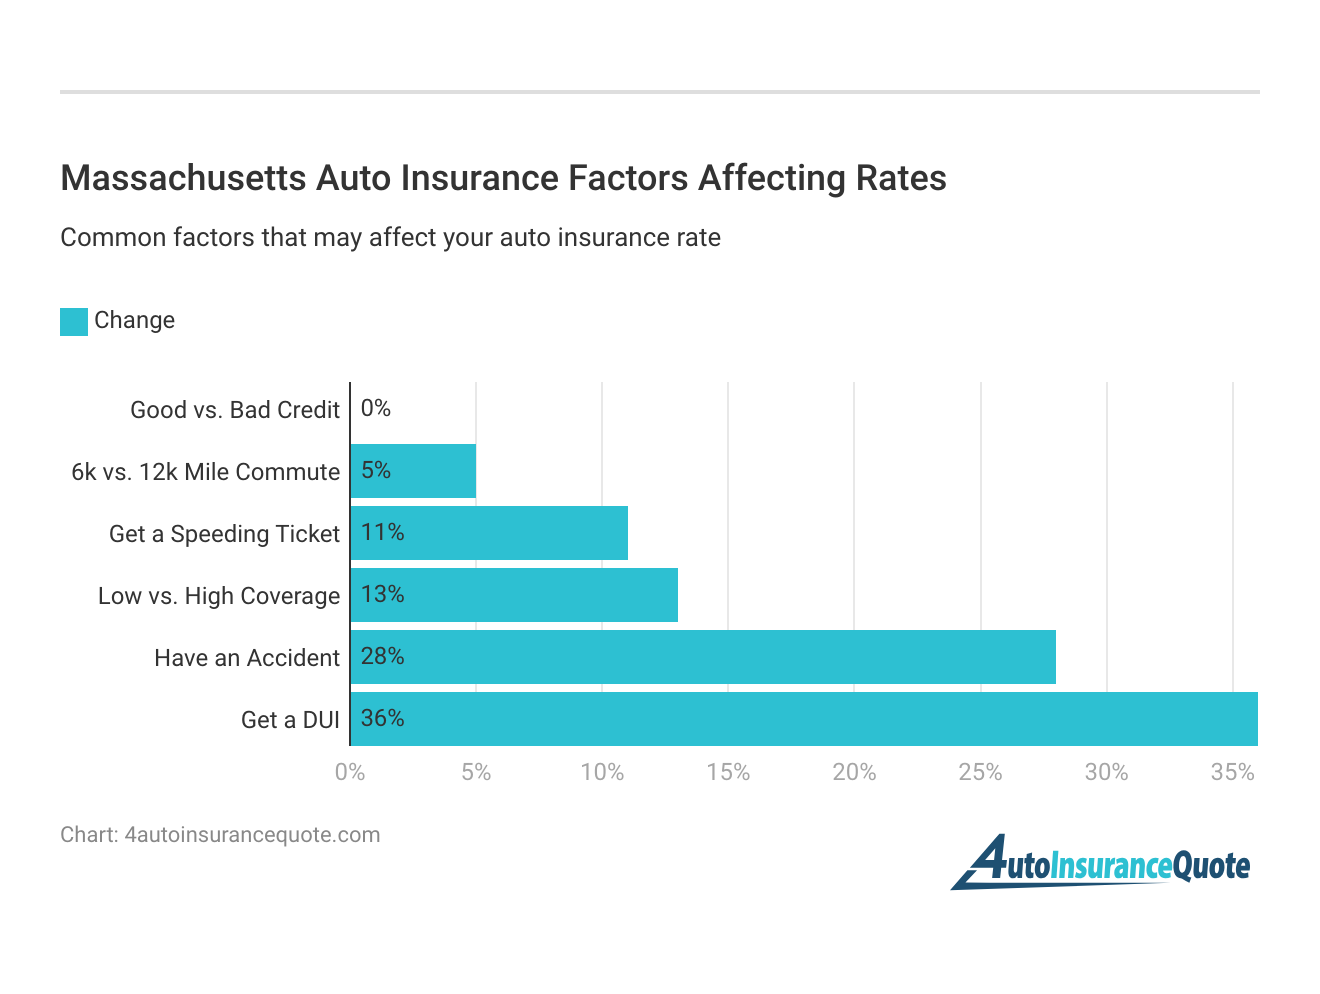 <h3>Massachusetts Auto Insurance Factors Affecting Rates</h3>